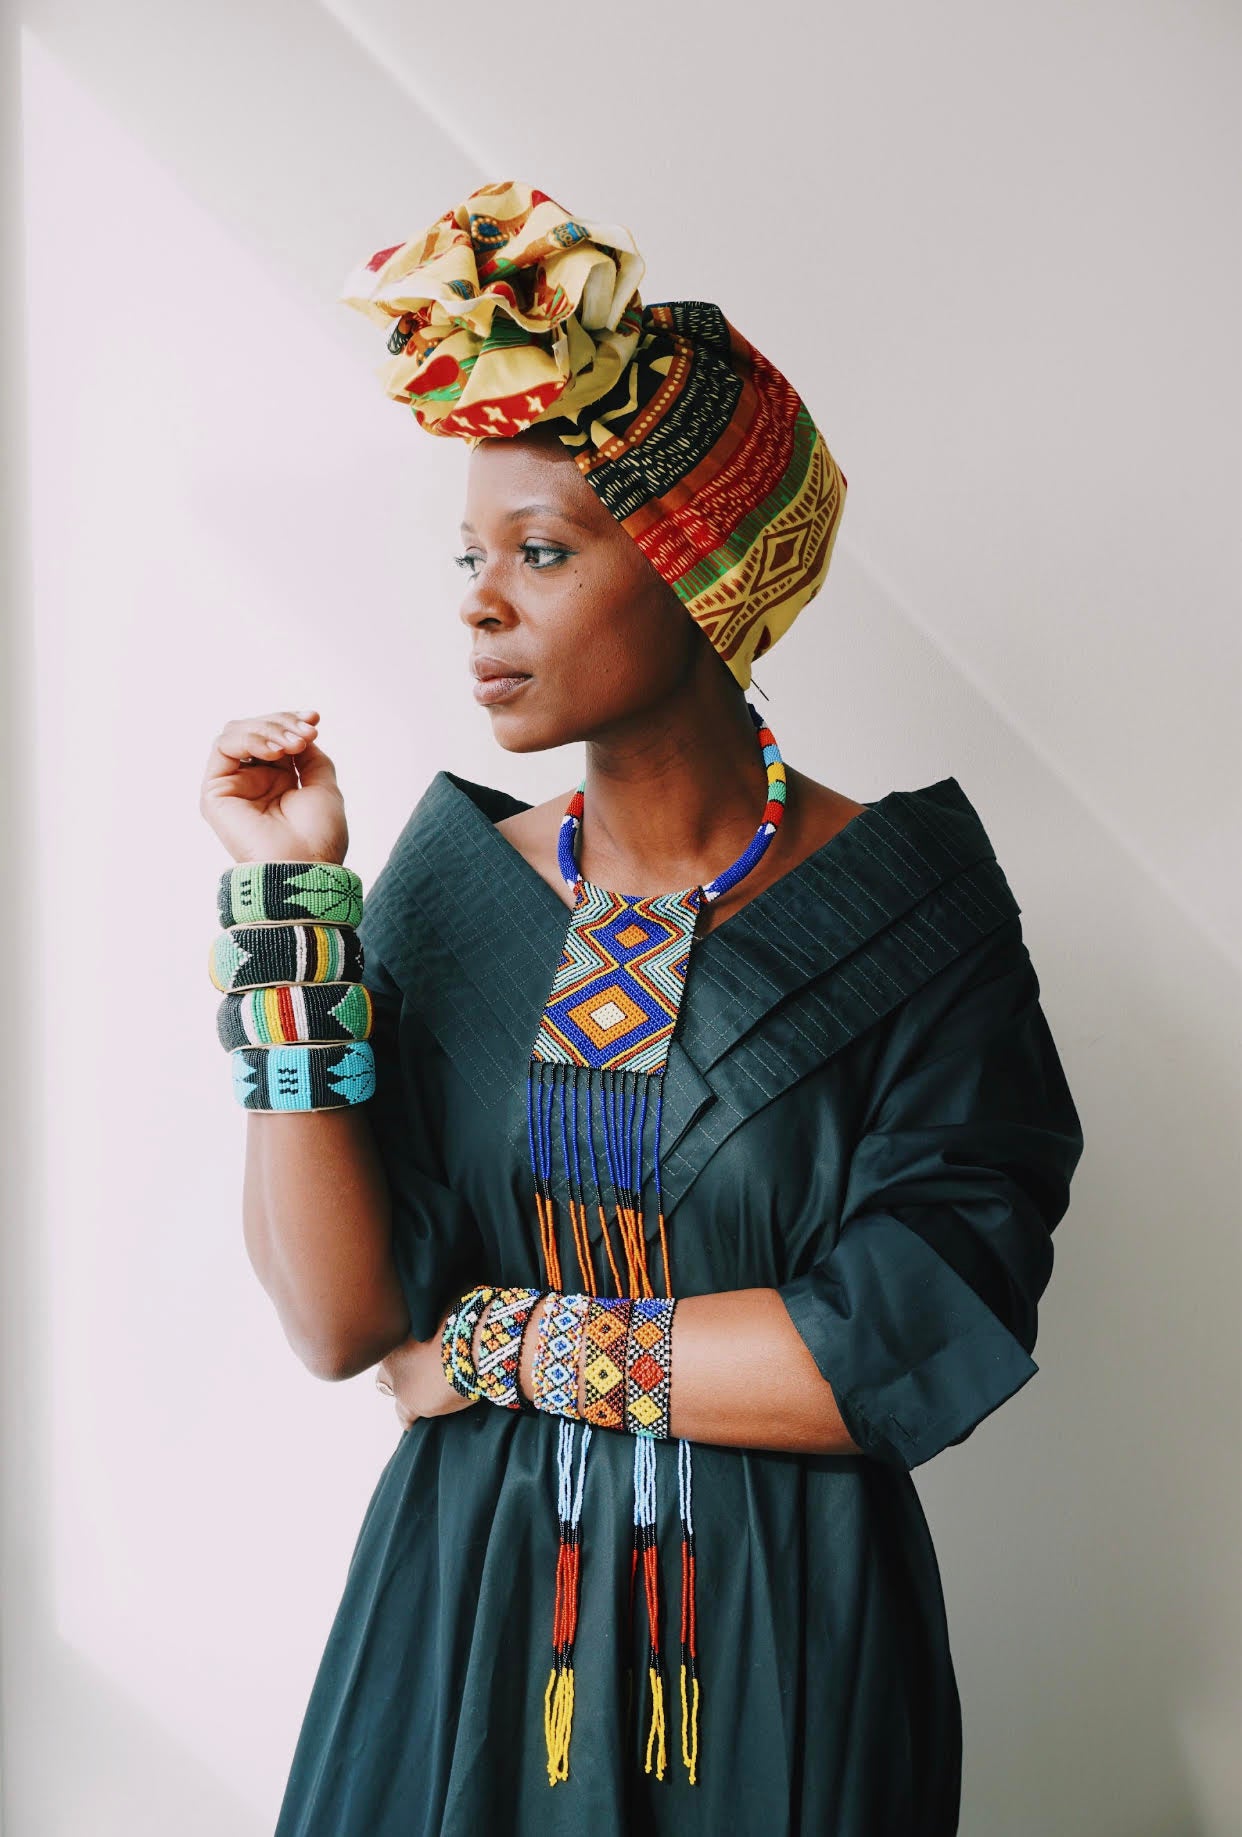 Beyond Women’s History Month: Black Women Fashion Designers You Should Know